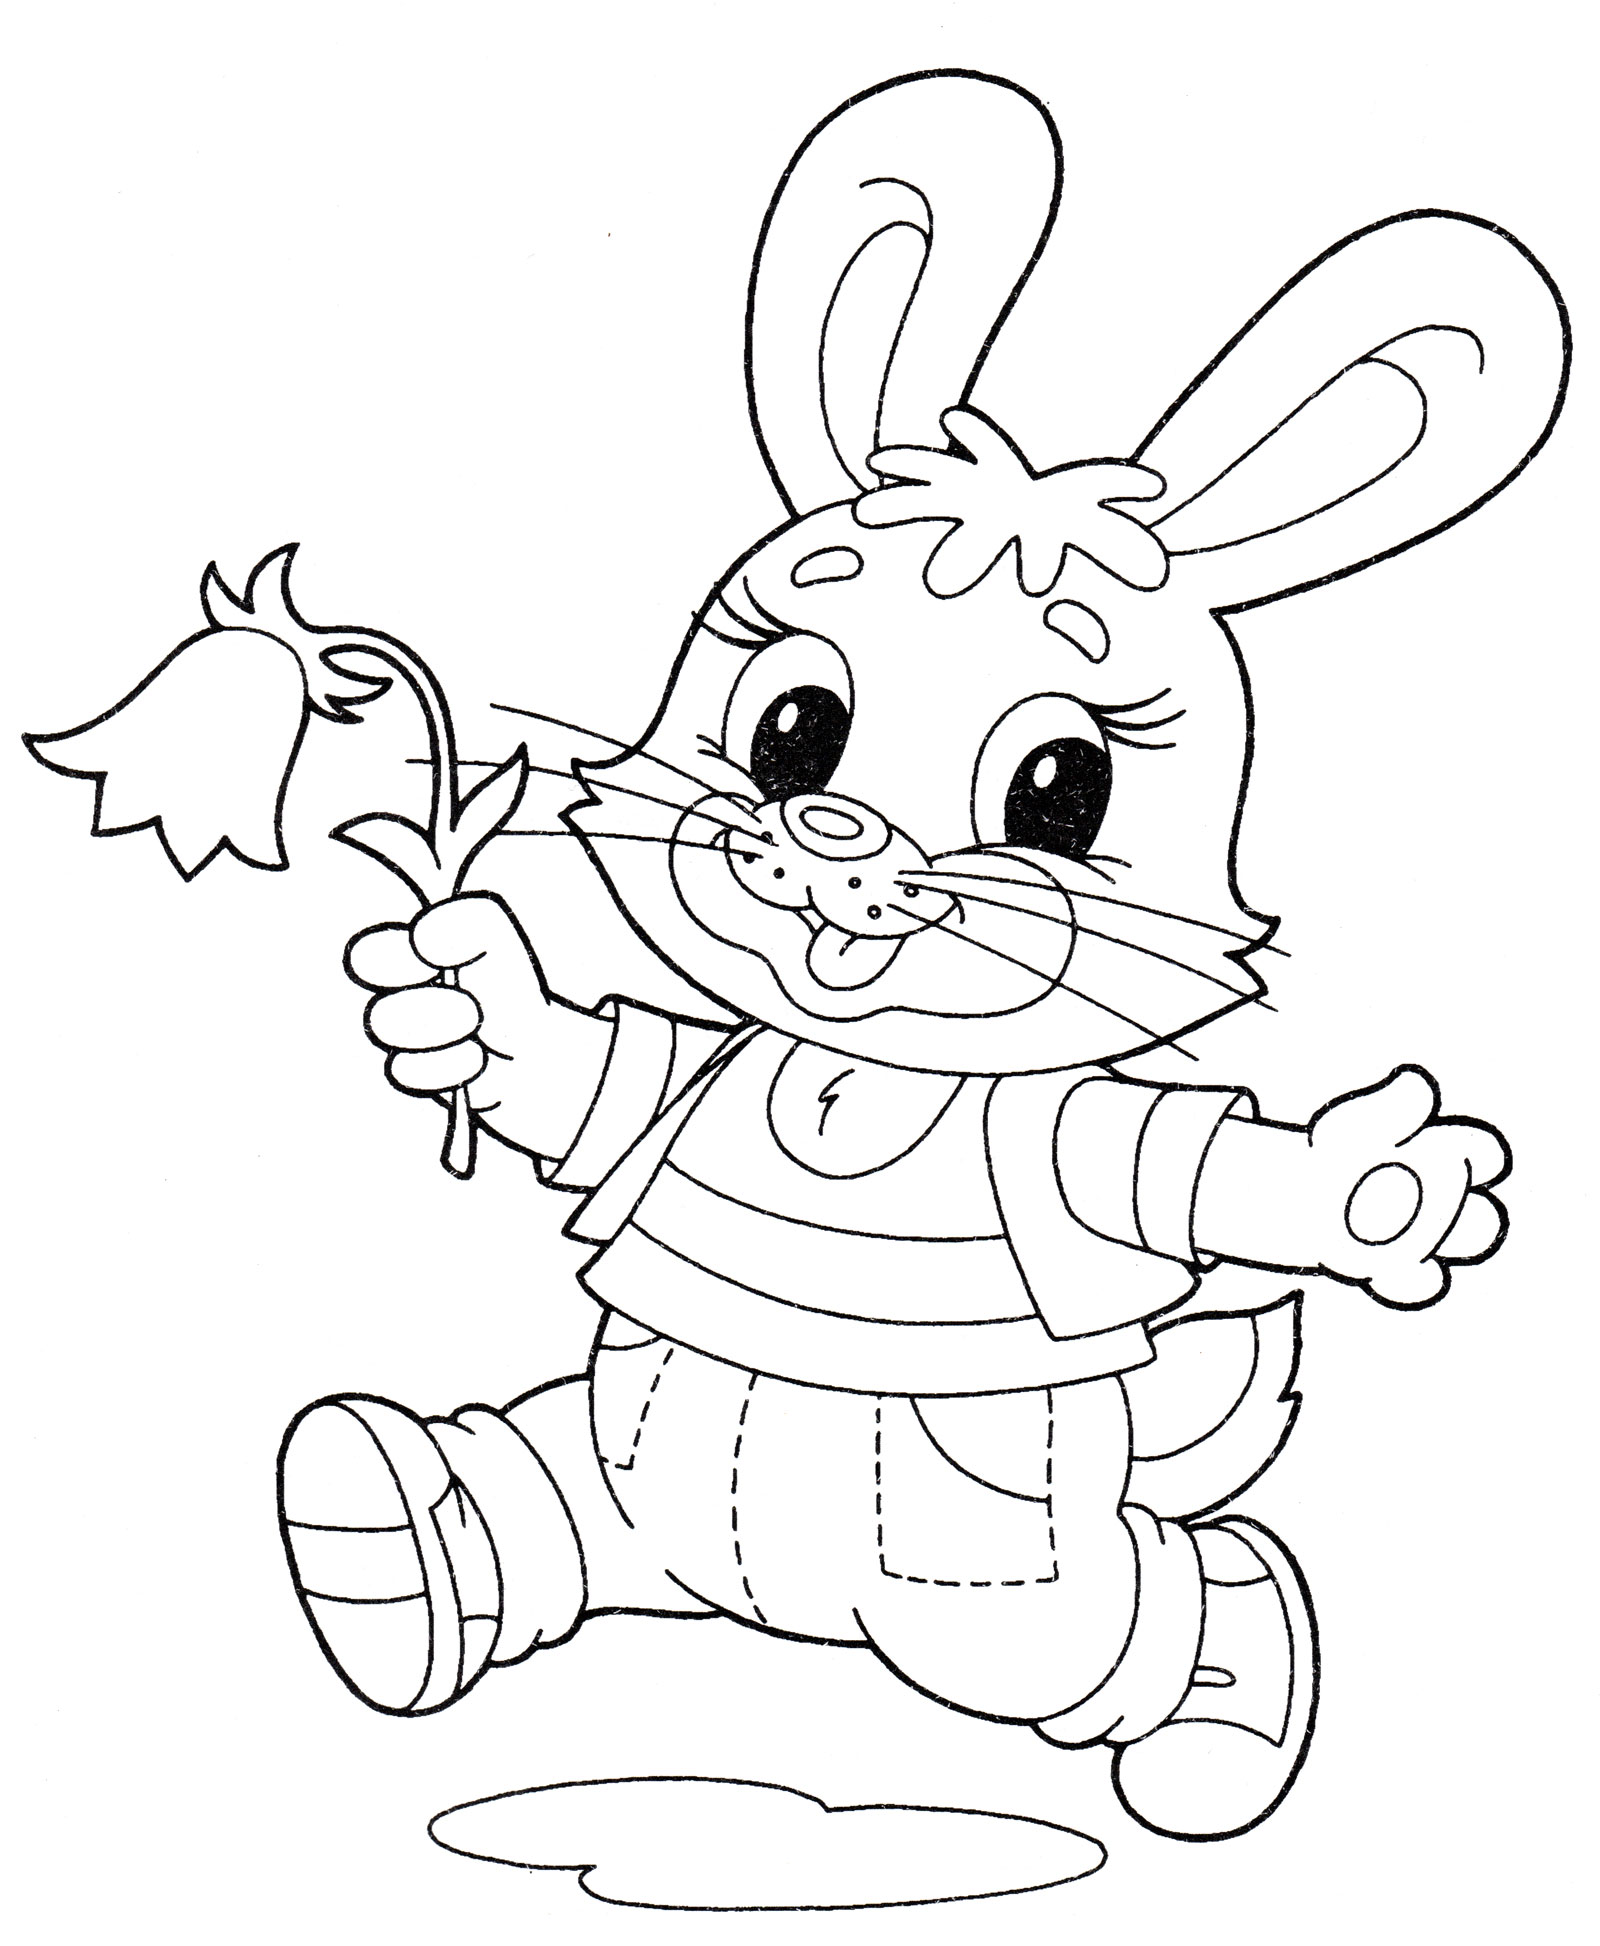 Раскраска зверята распечатать. Раскраска зайчик. Заяц раскраска для детей. Зайчик картинка для детей раскраска. Зайка раскраска для малышей.